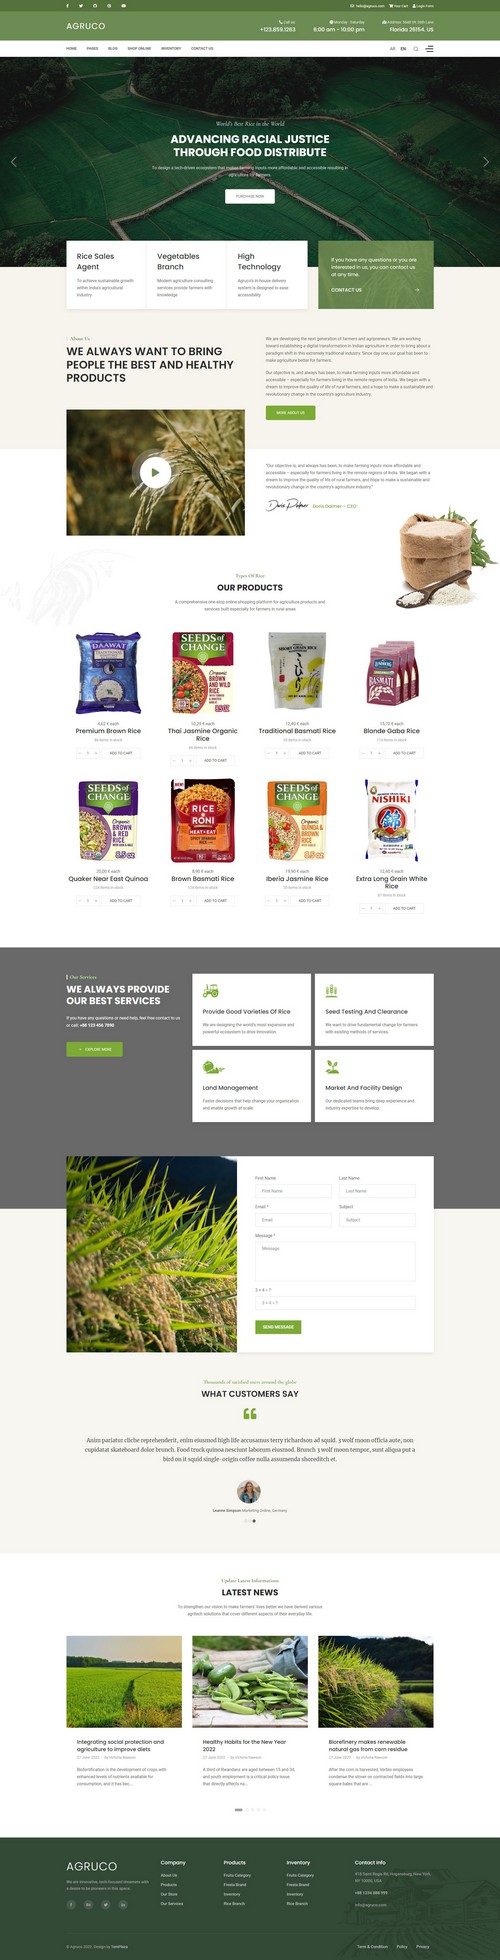 Agruco - Agriculture & Organic Food Joomla 4 Template